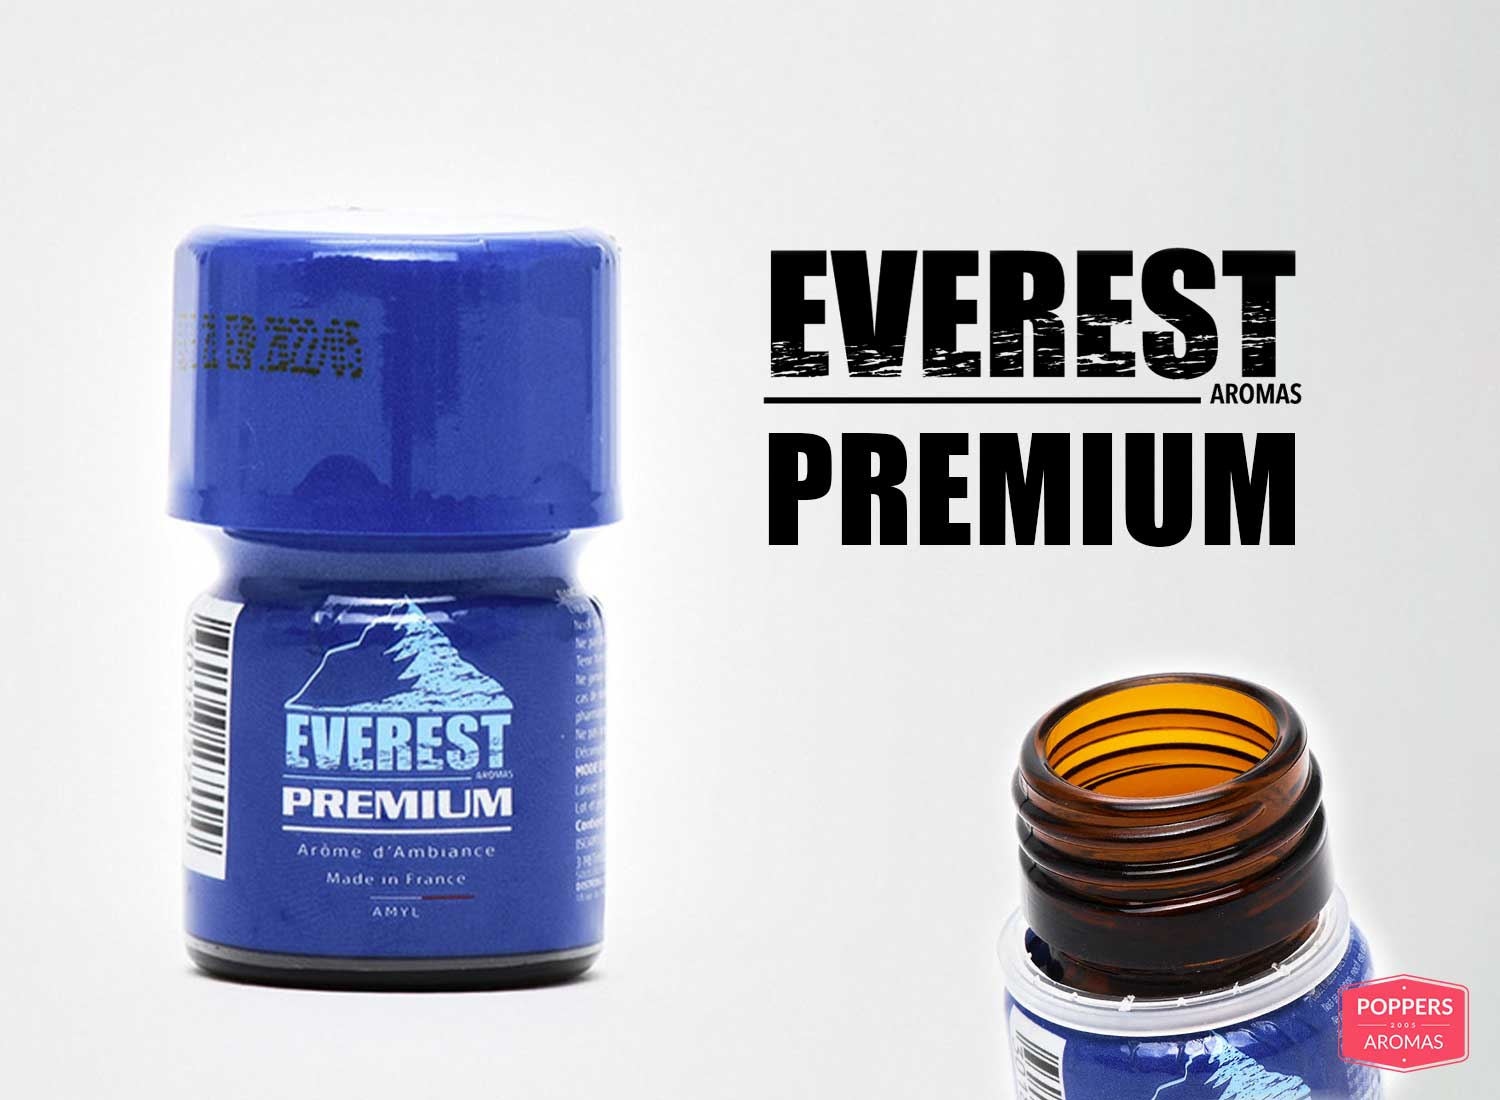 Everest Premium poppers new version